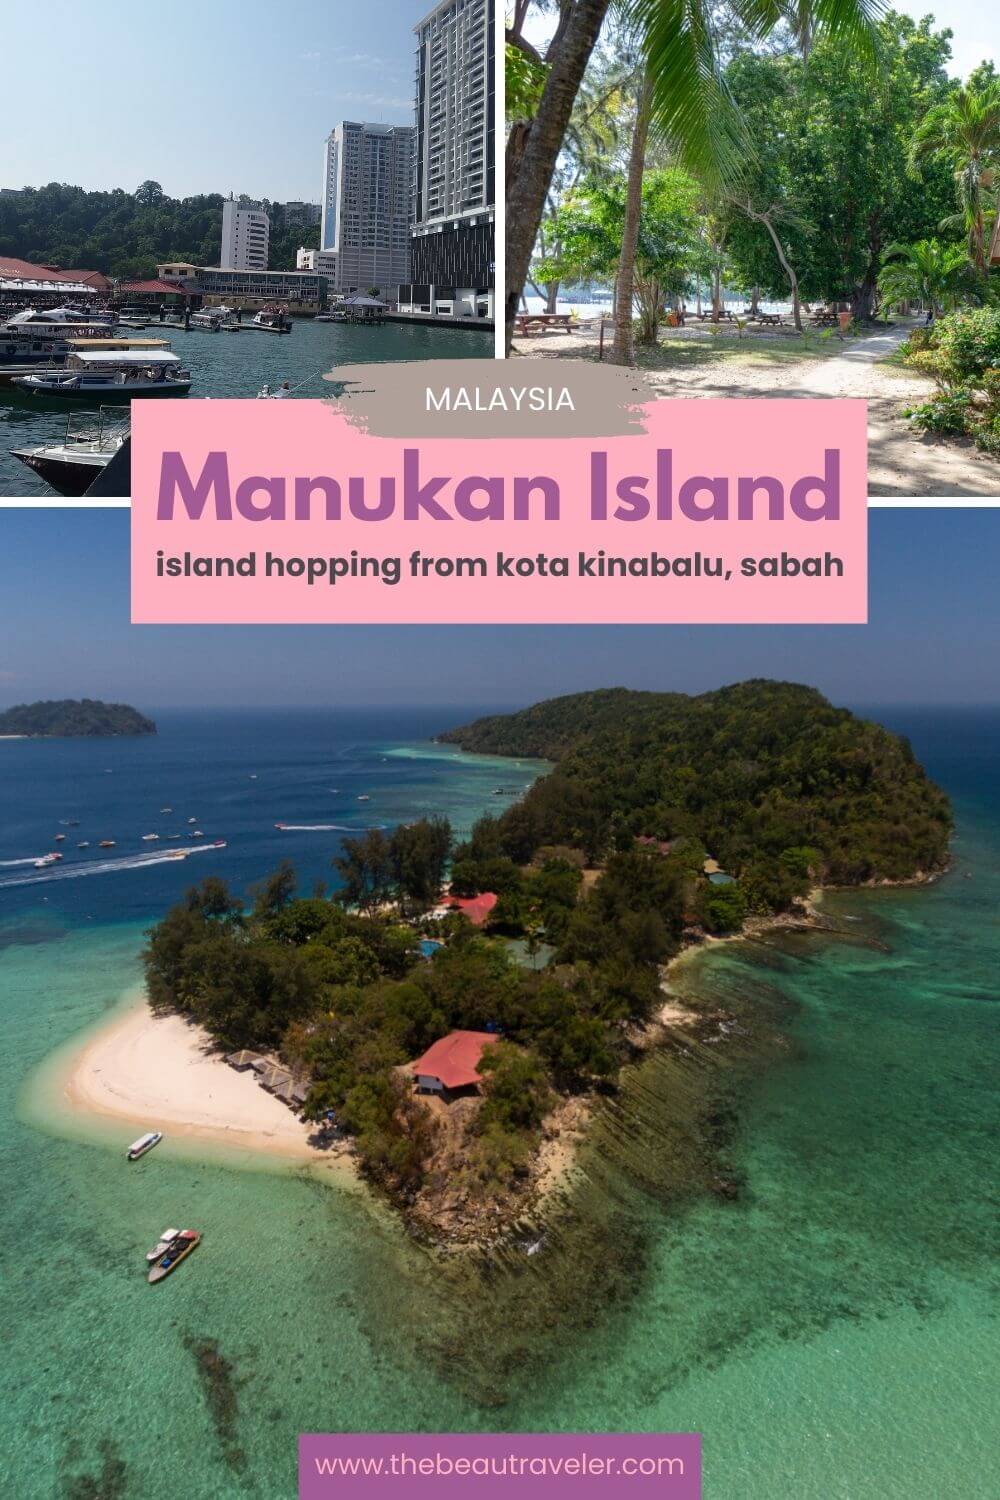 Island Hopping to Manukan Island from Kota Kinabalu - The BeauTraveler